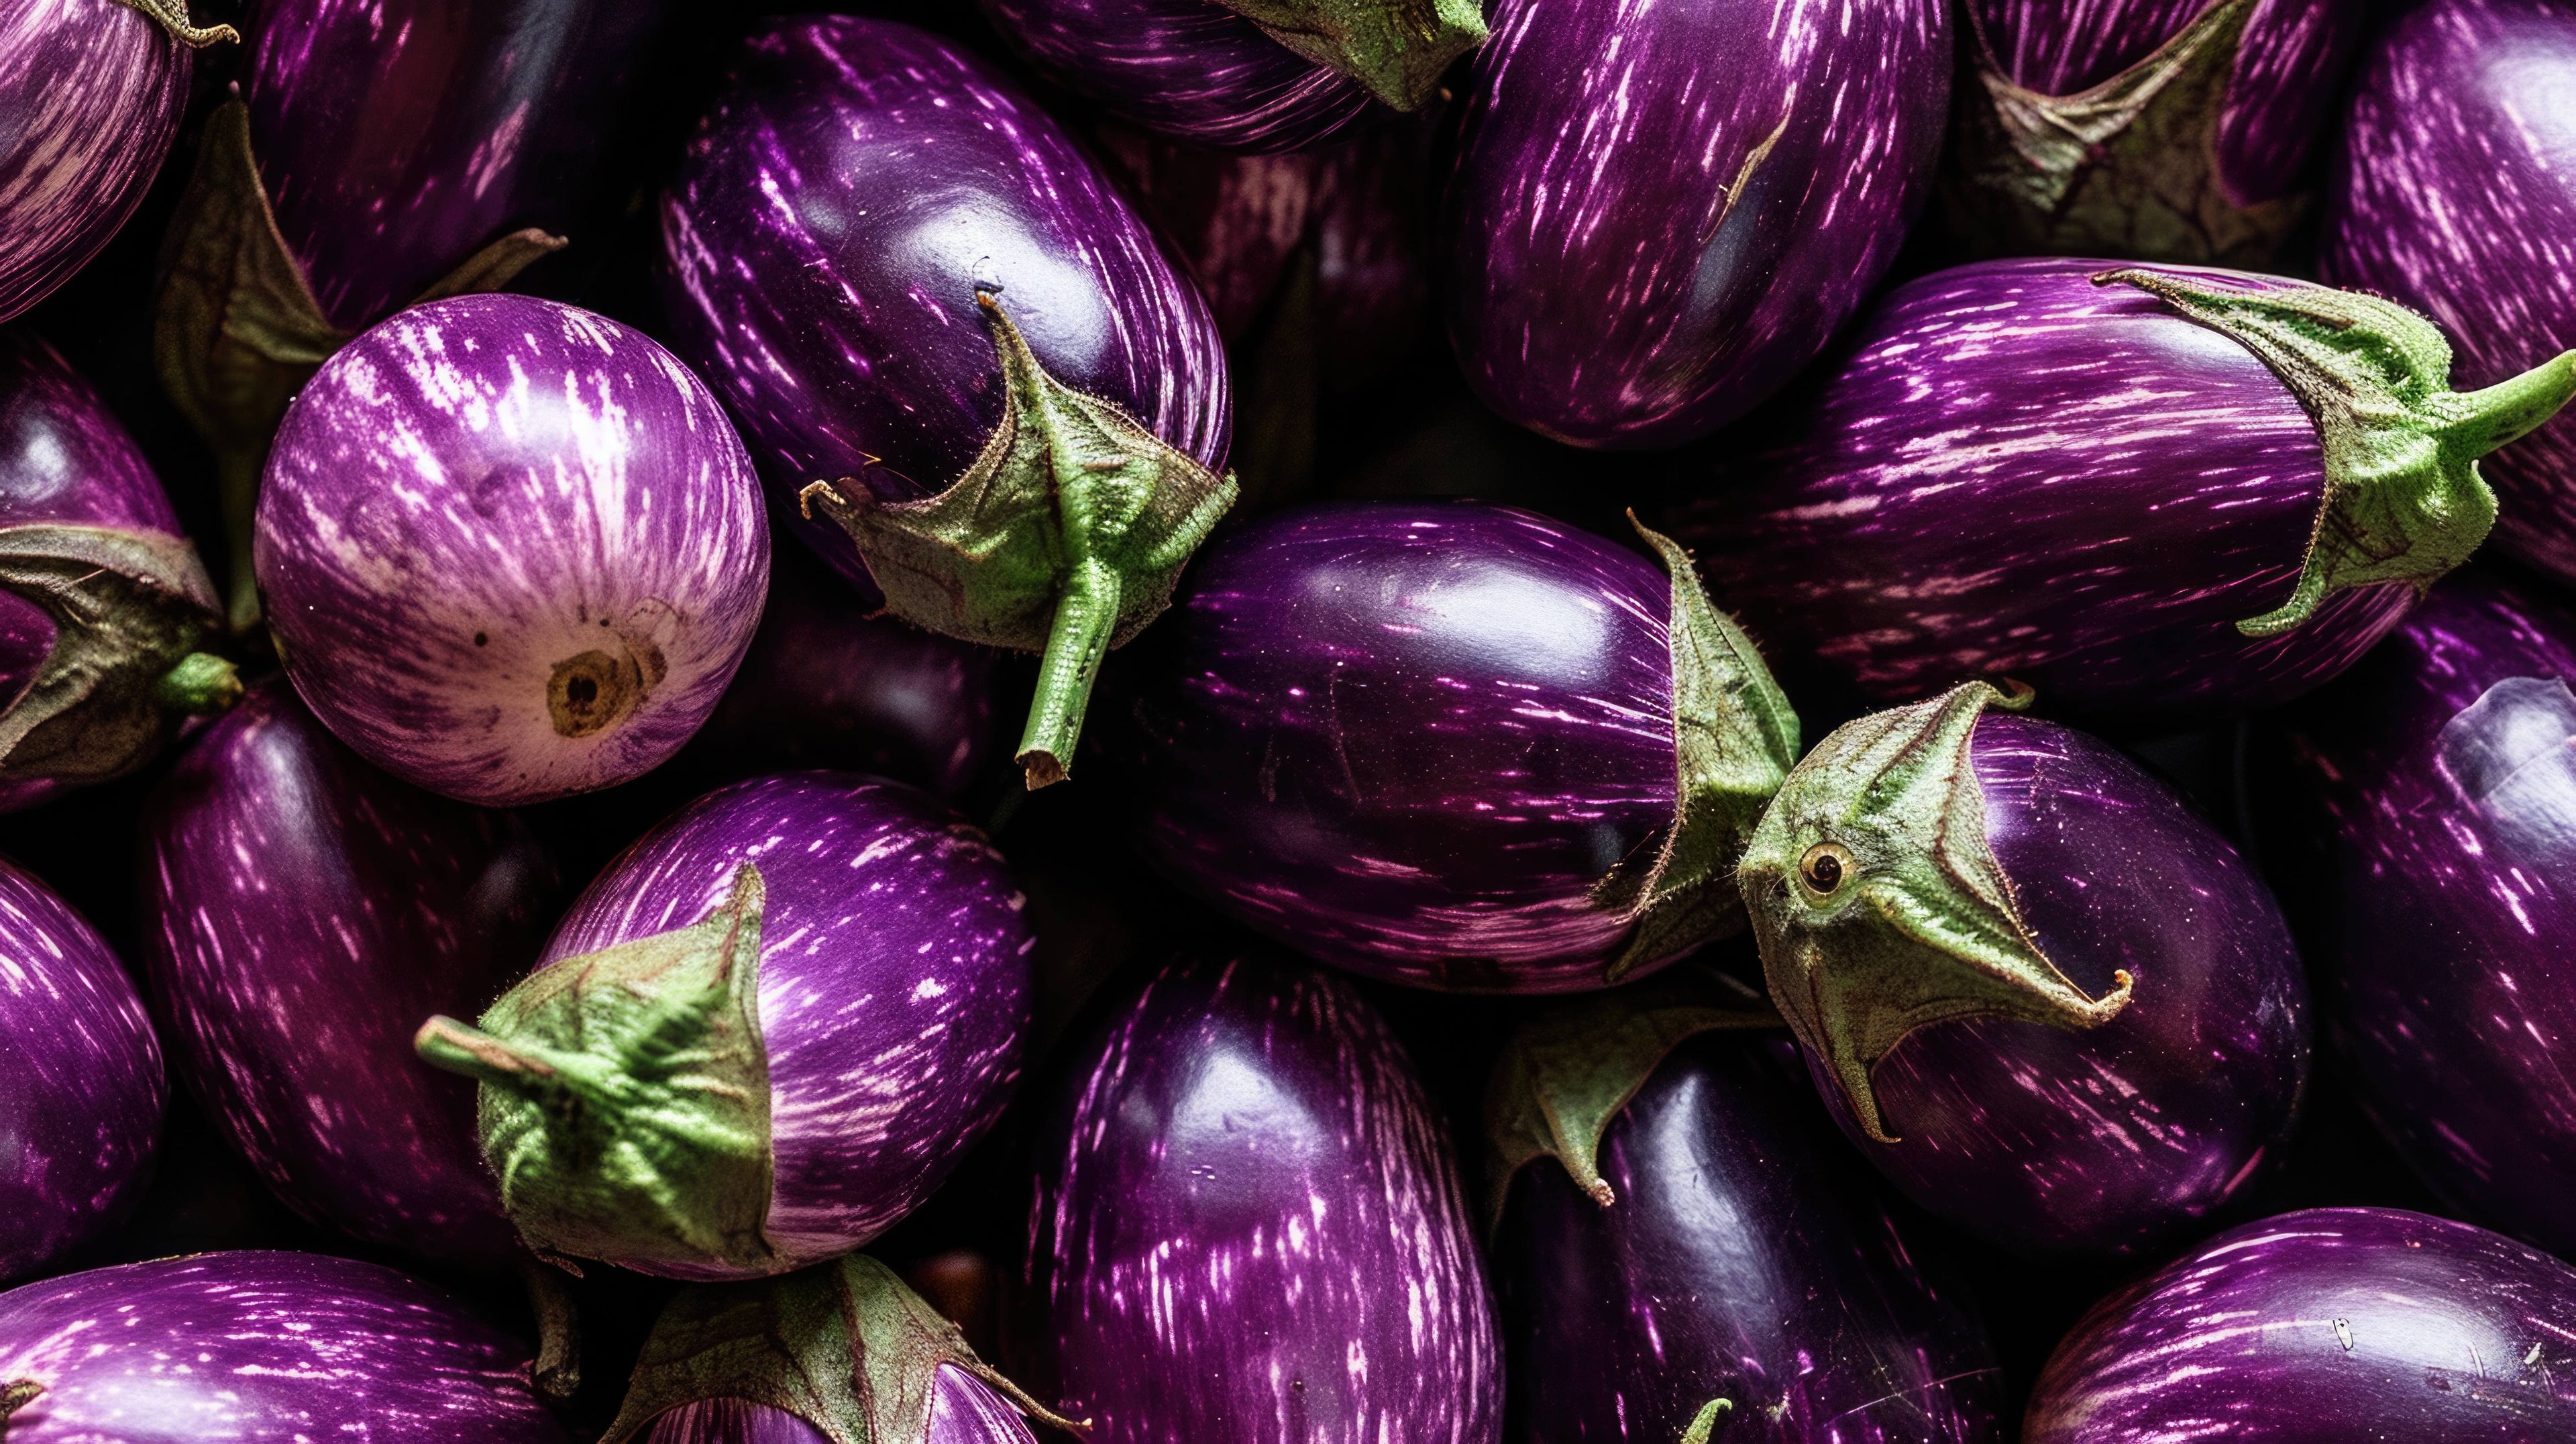 purple-eggplants-striped-eggplants-fresh-eggplants-eggplant-background-auber-wrtjgfff.jpeg__PID:92c8303a-a1f3-4603-a2ac-1dda6b166942